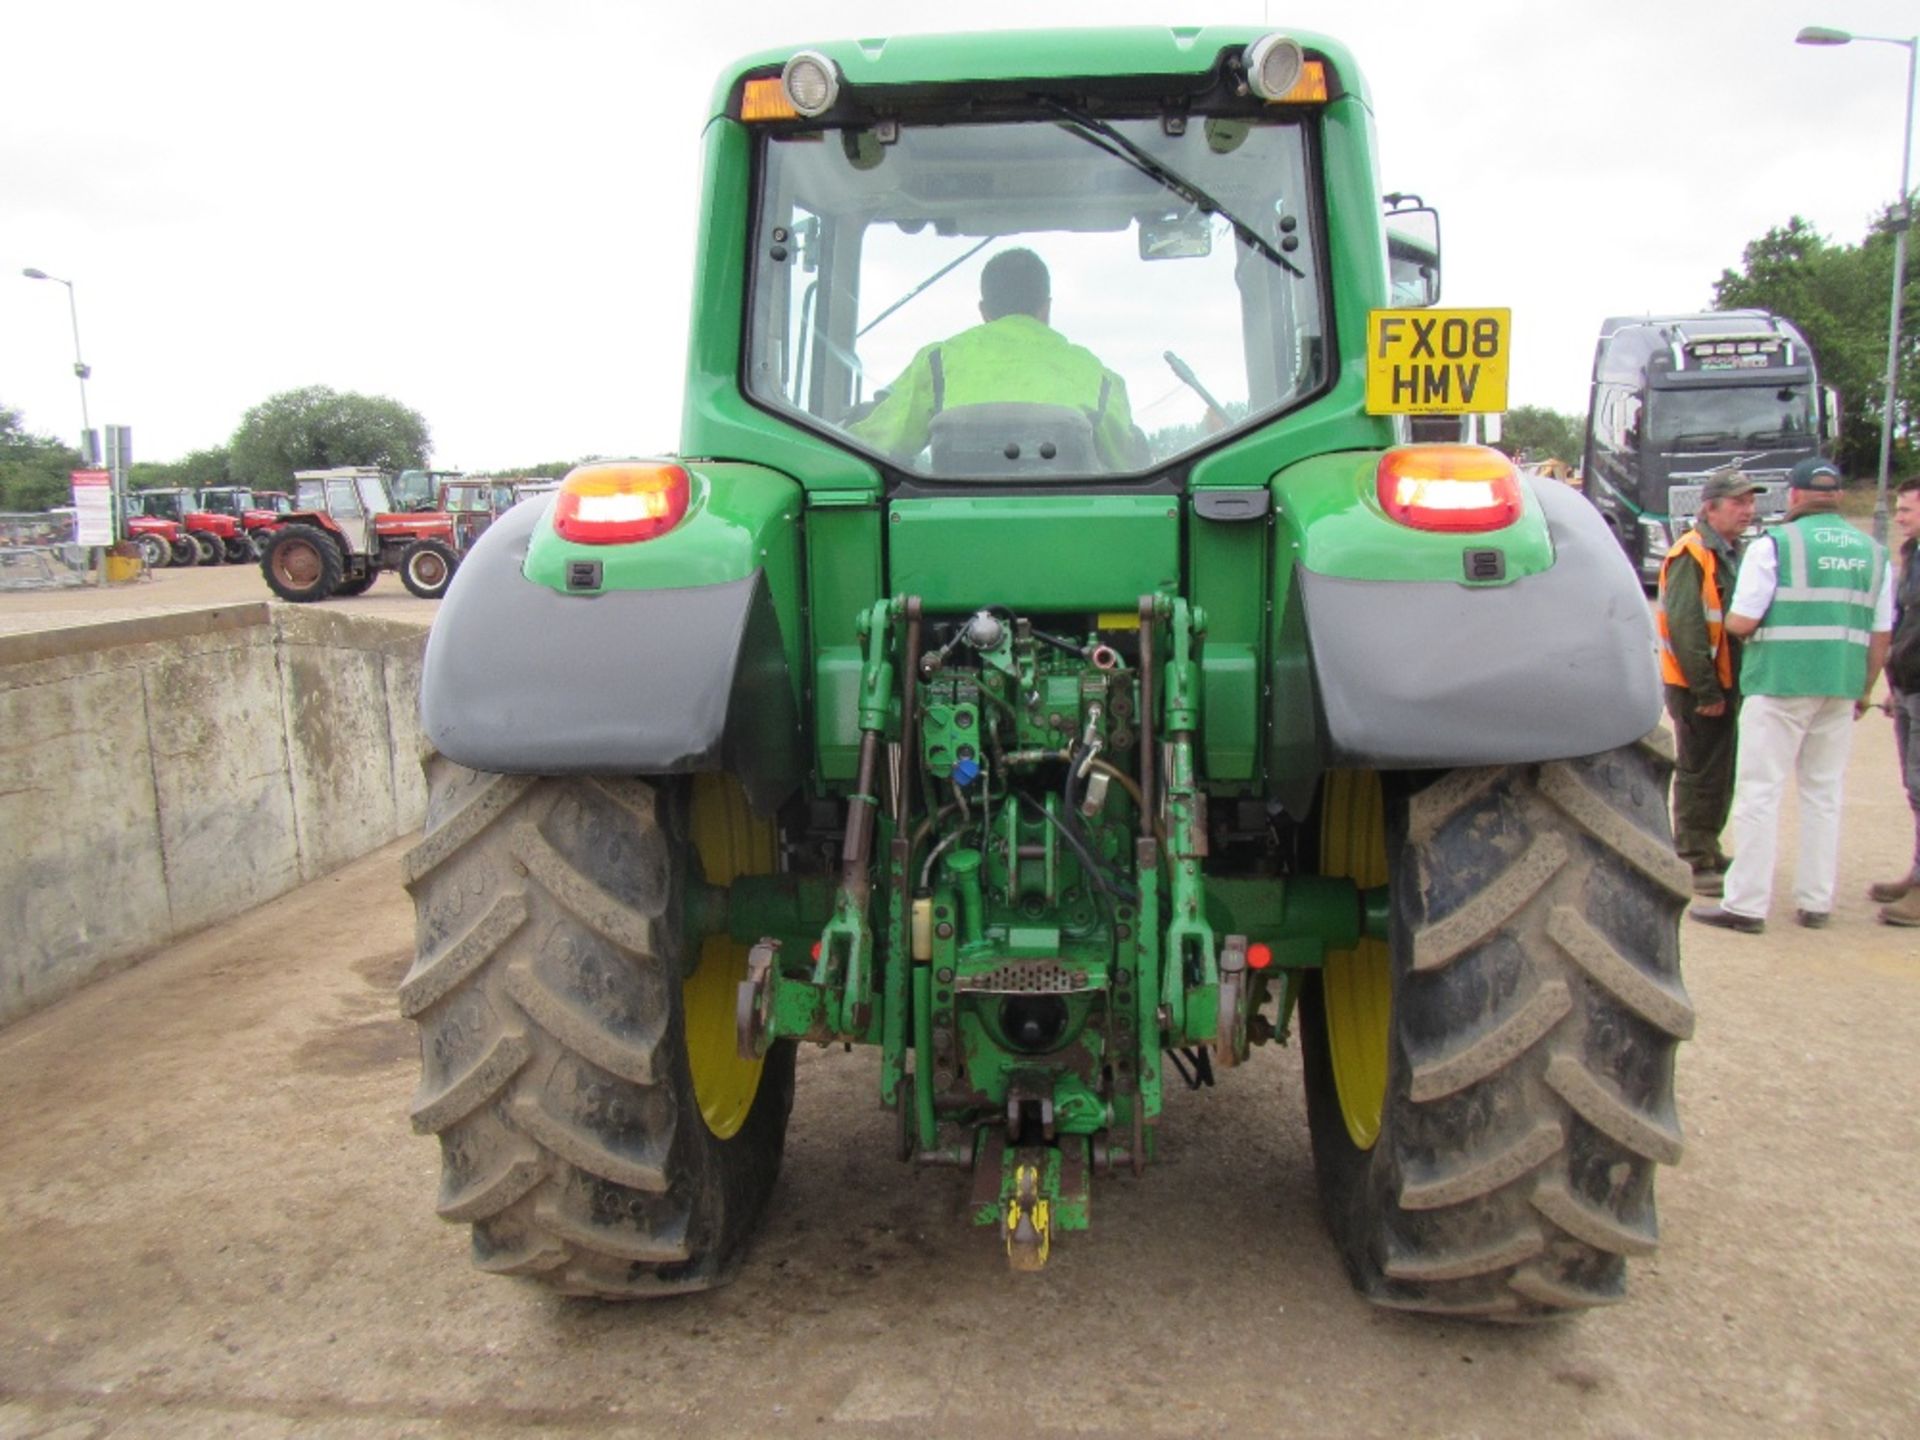 John Deere 6430 Tractor c/w 50k, air brakes Reg. No. FX08 HMV - Image 3 of 5